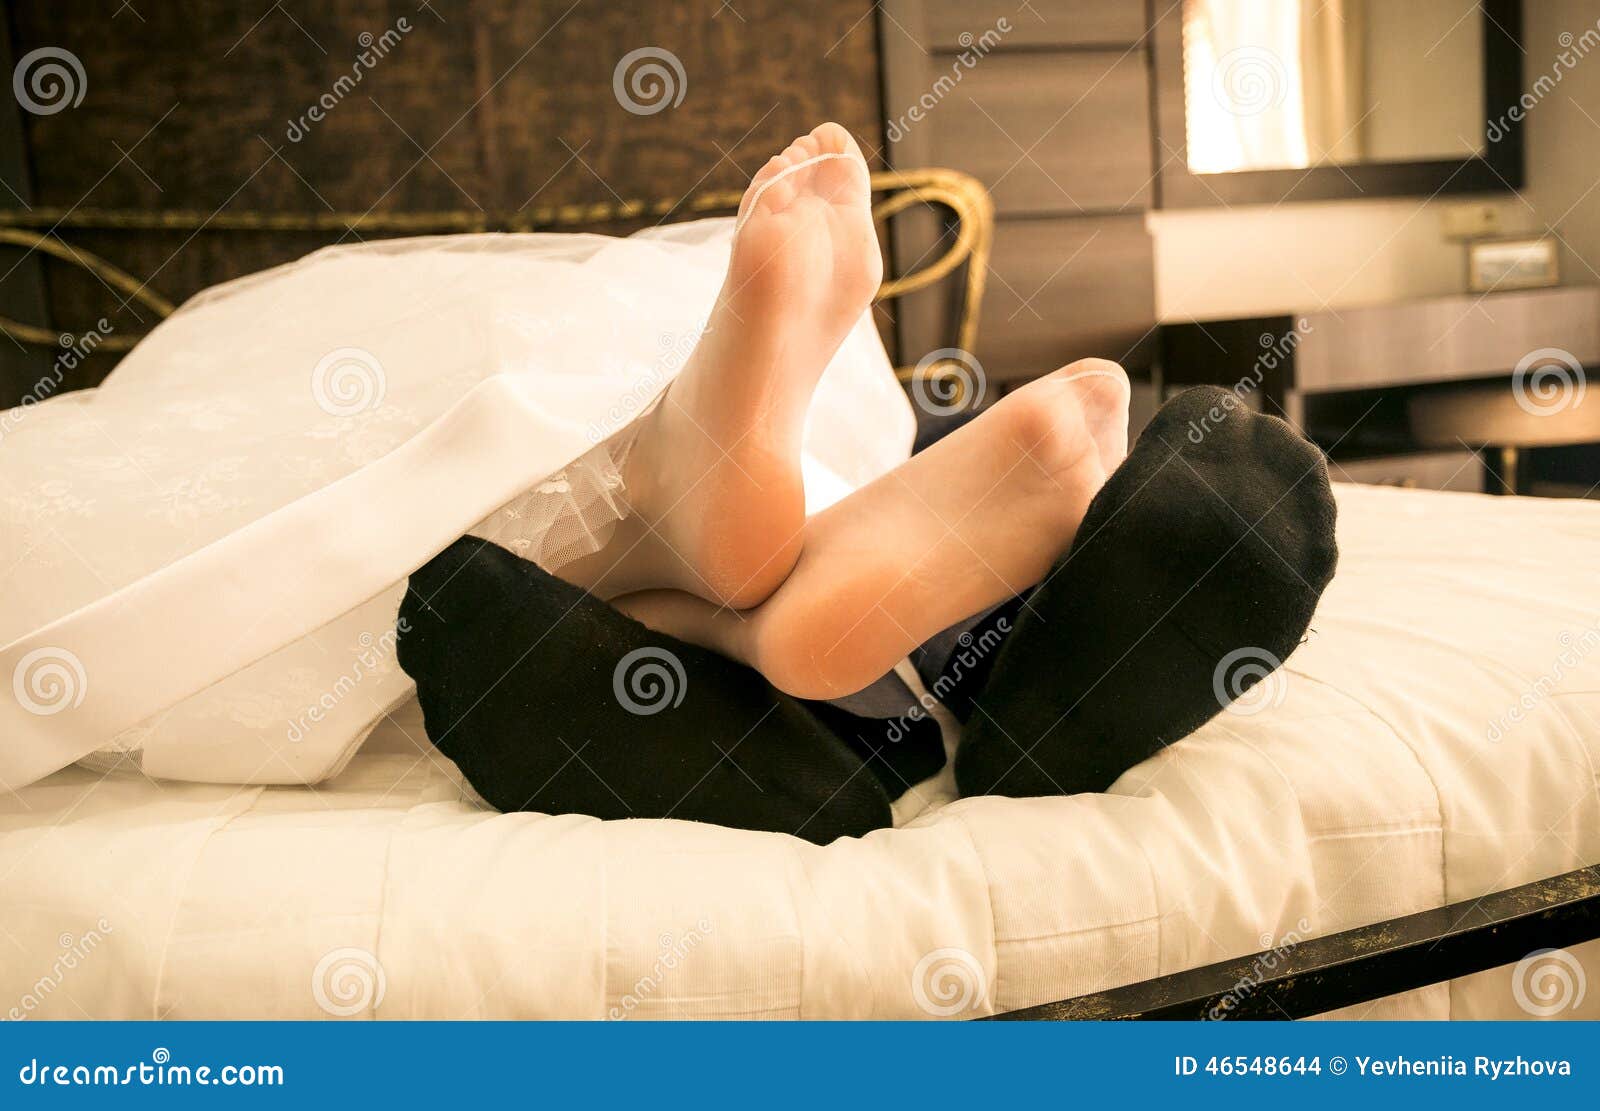 russian lesbians nylon feet